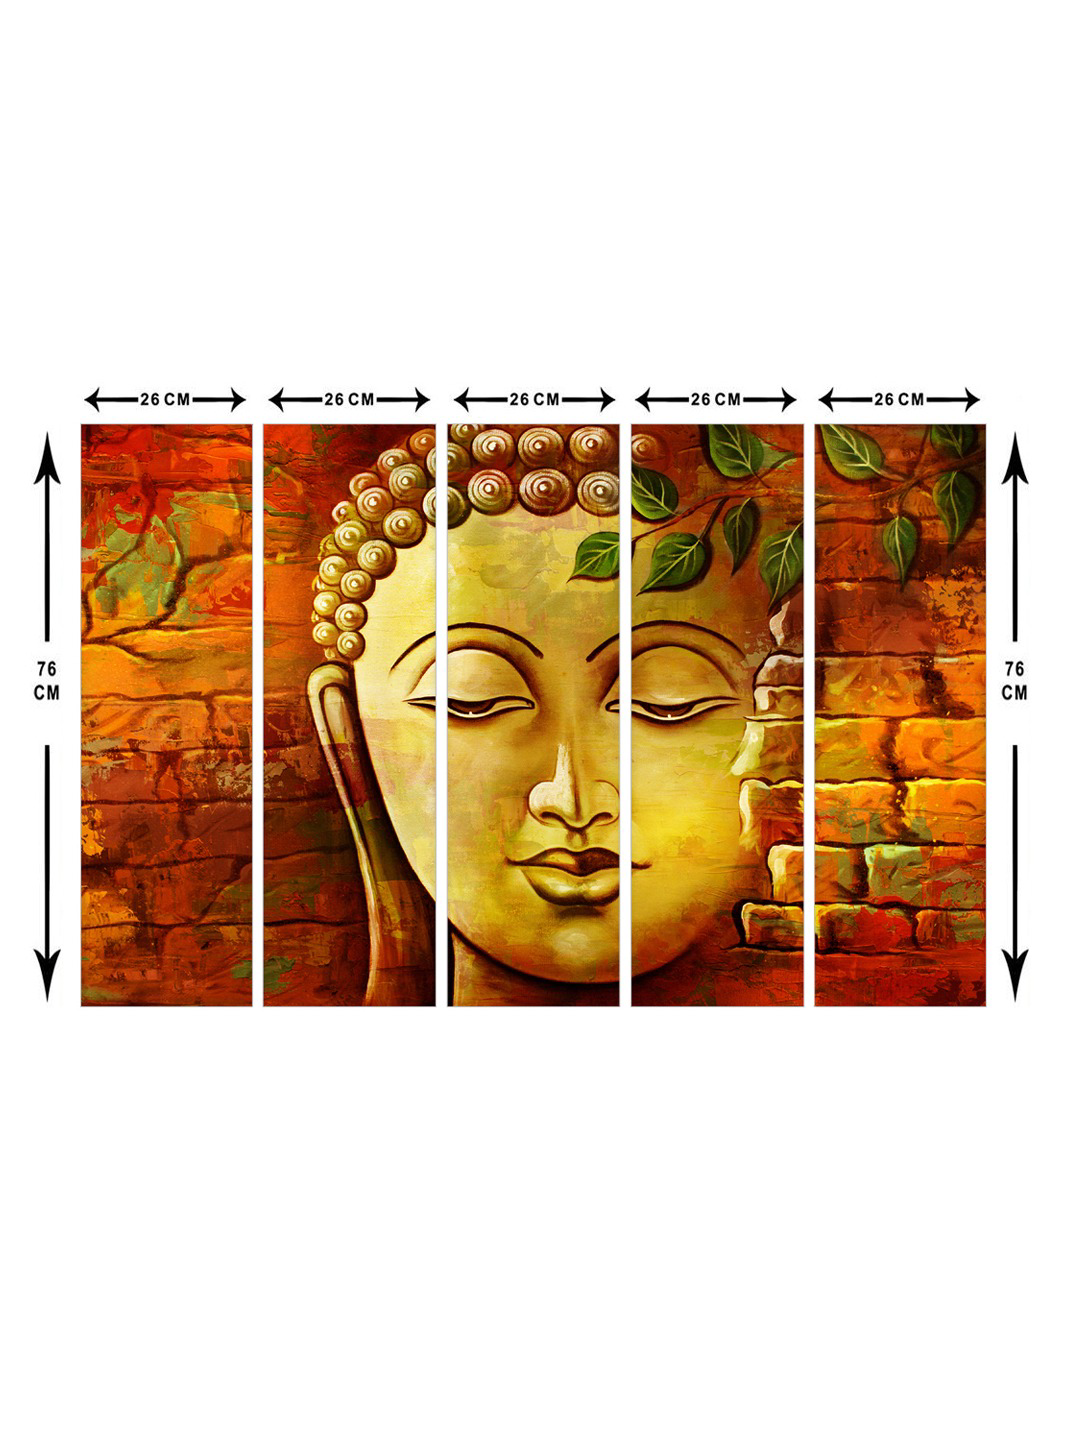 Set of 5 Orange & Yellow Printed Meditating Buddha Framed Wall Art